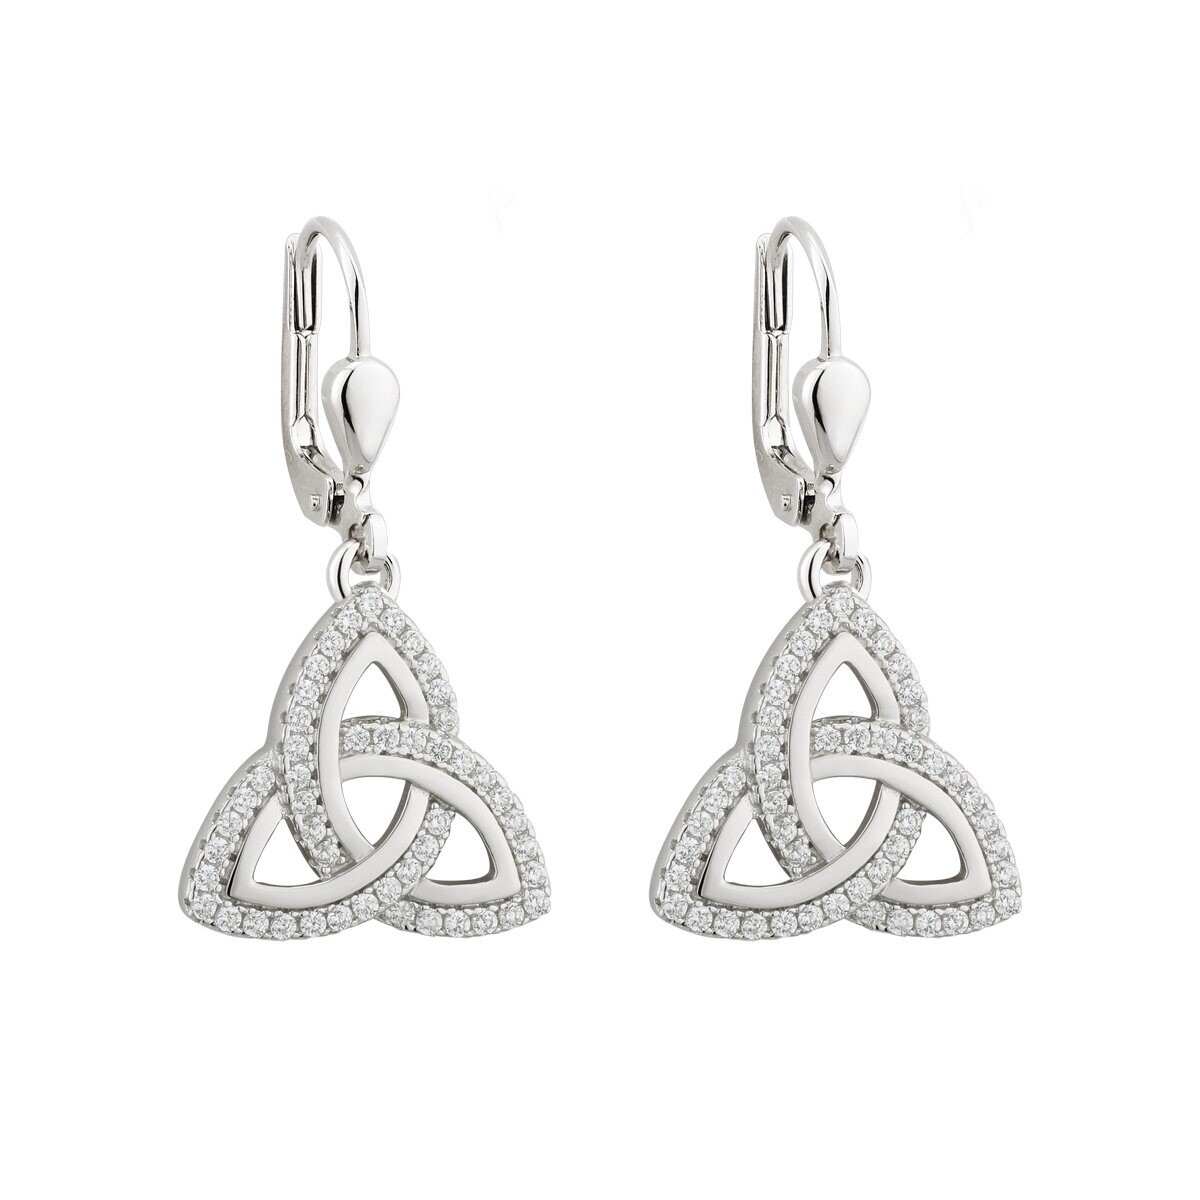 Silver drop Trinity earrings with CZ